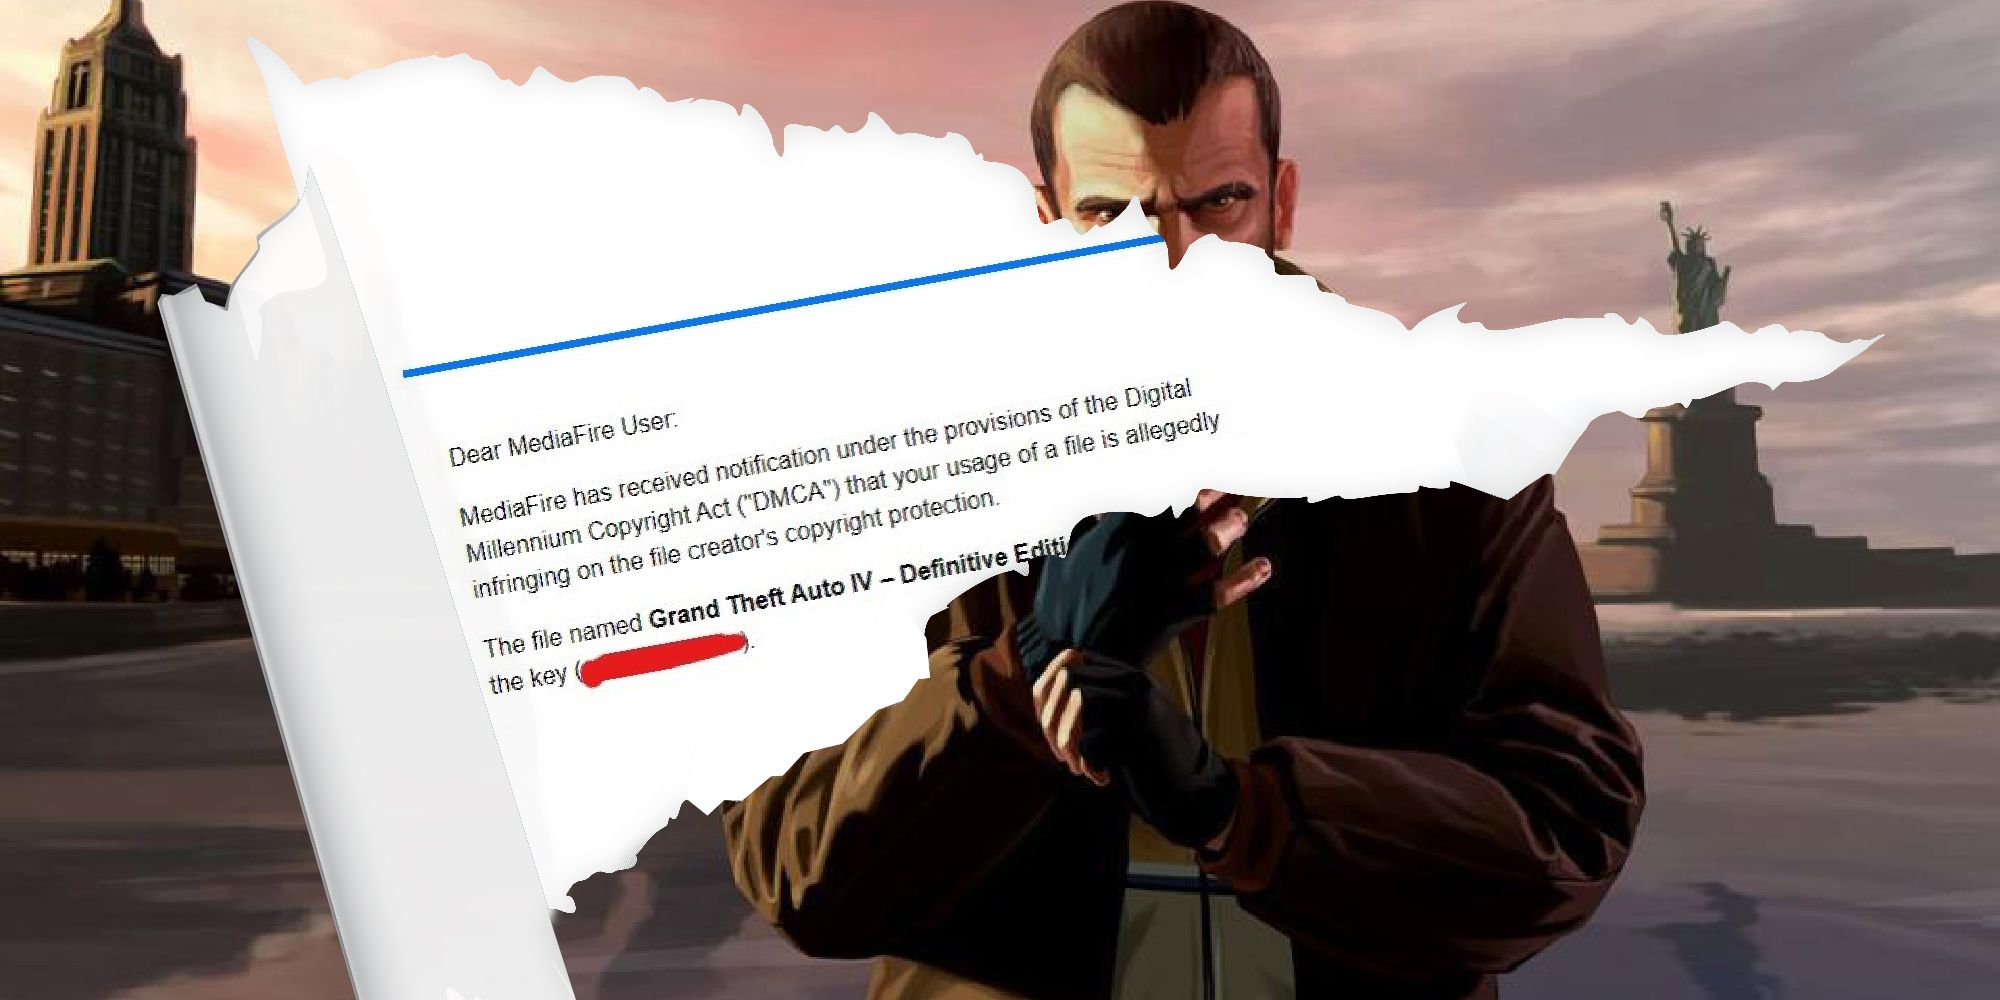 GTA 4 remake seemingly teased by Rockstar parent company